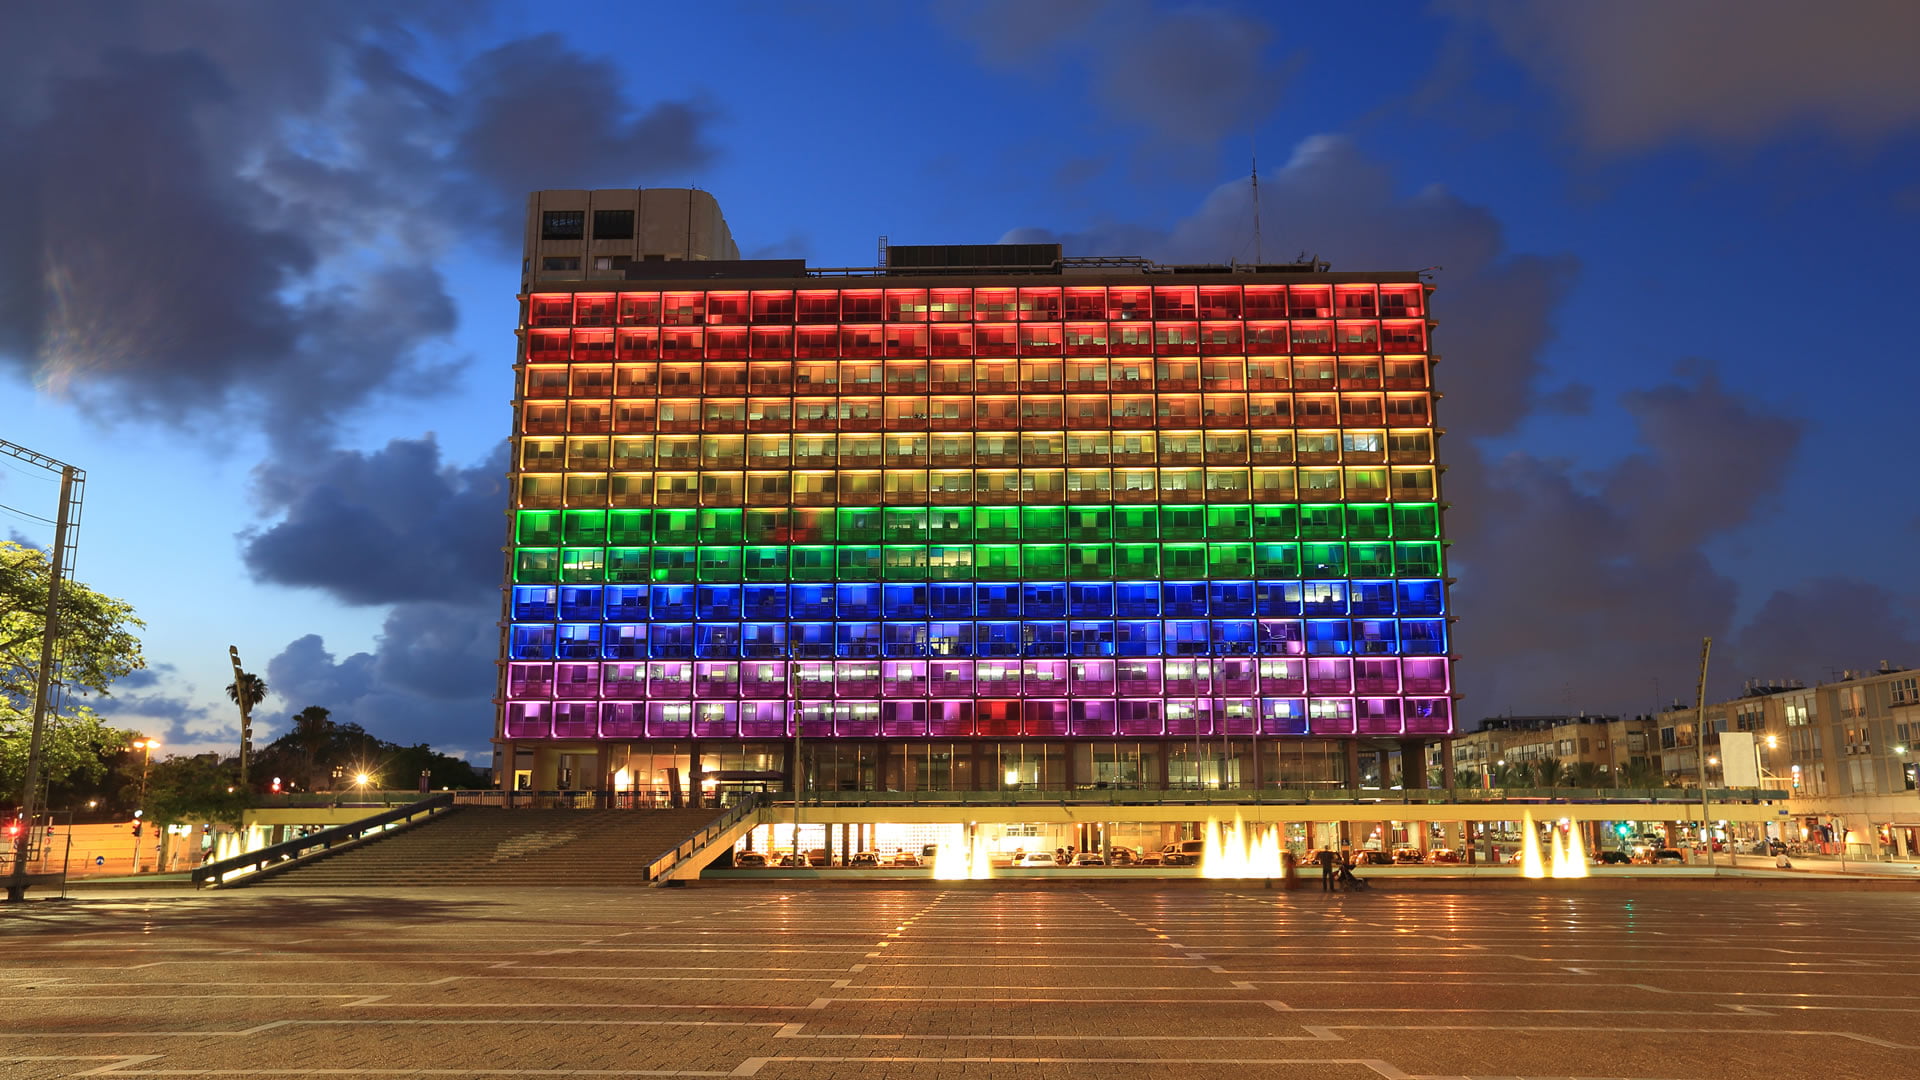 Tel Aviveko Udala (Israel) gay harrotasunean